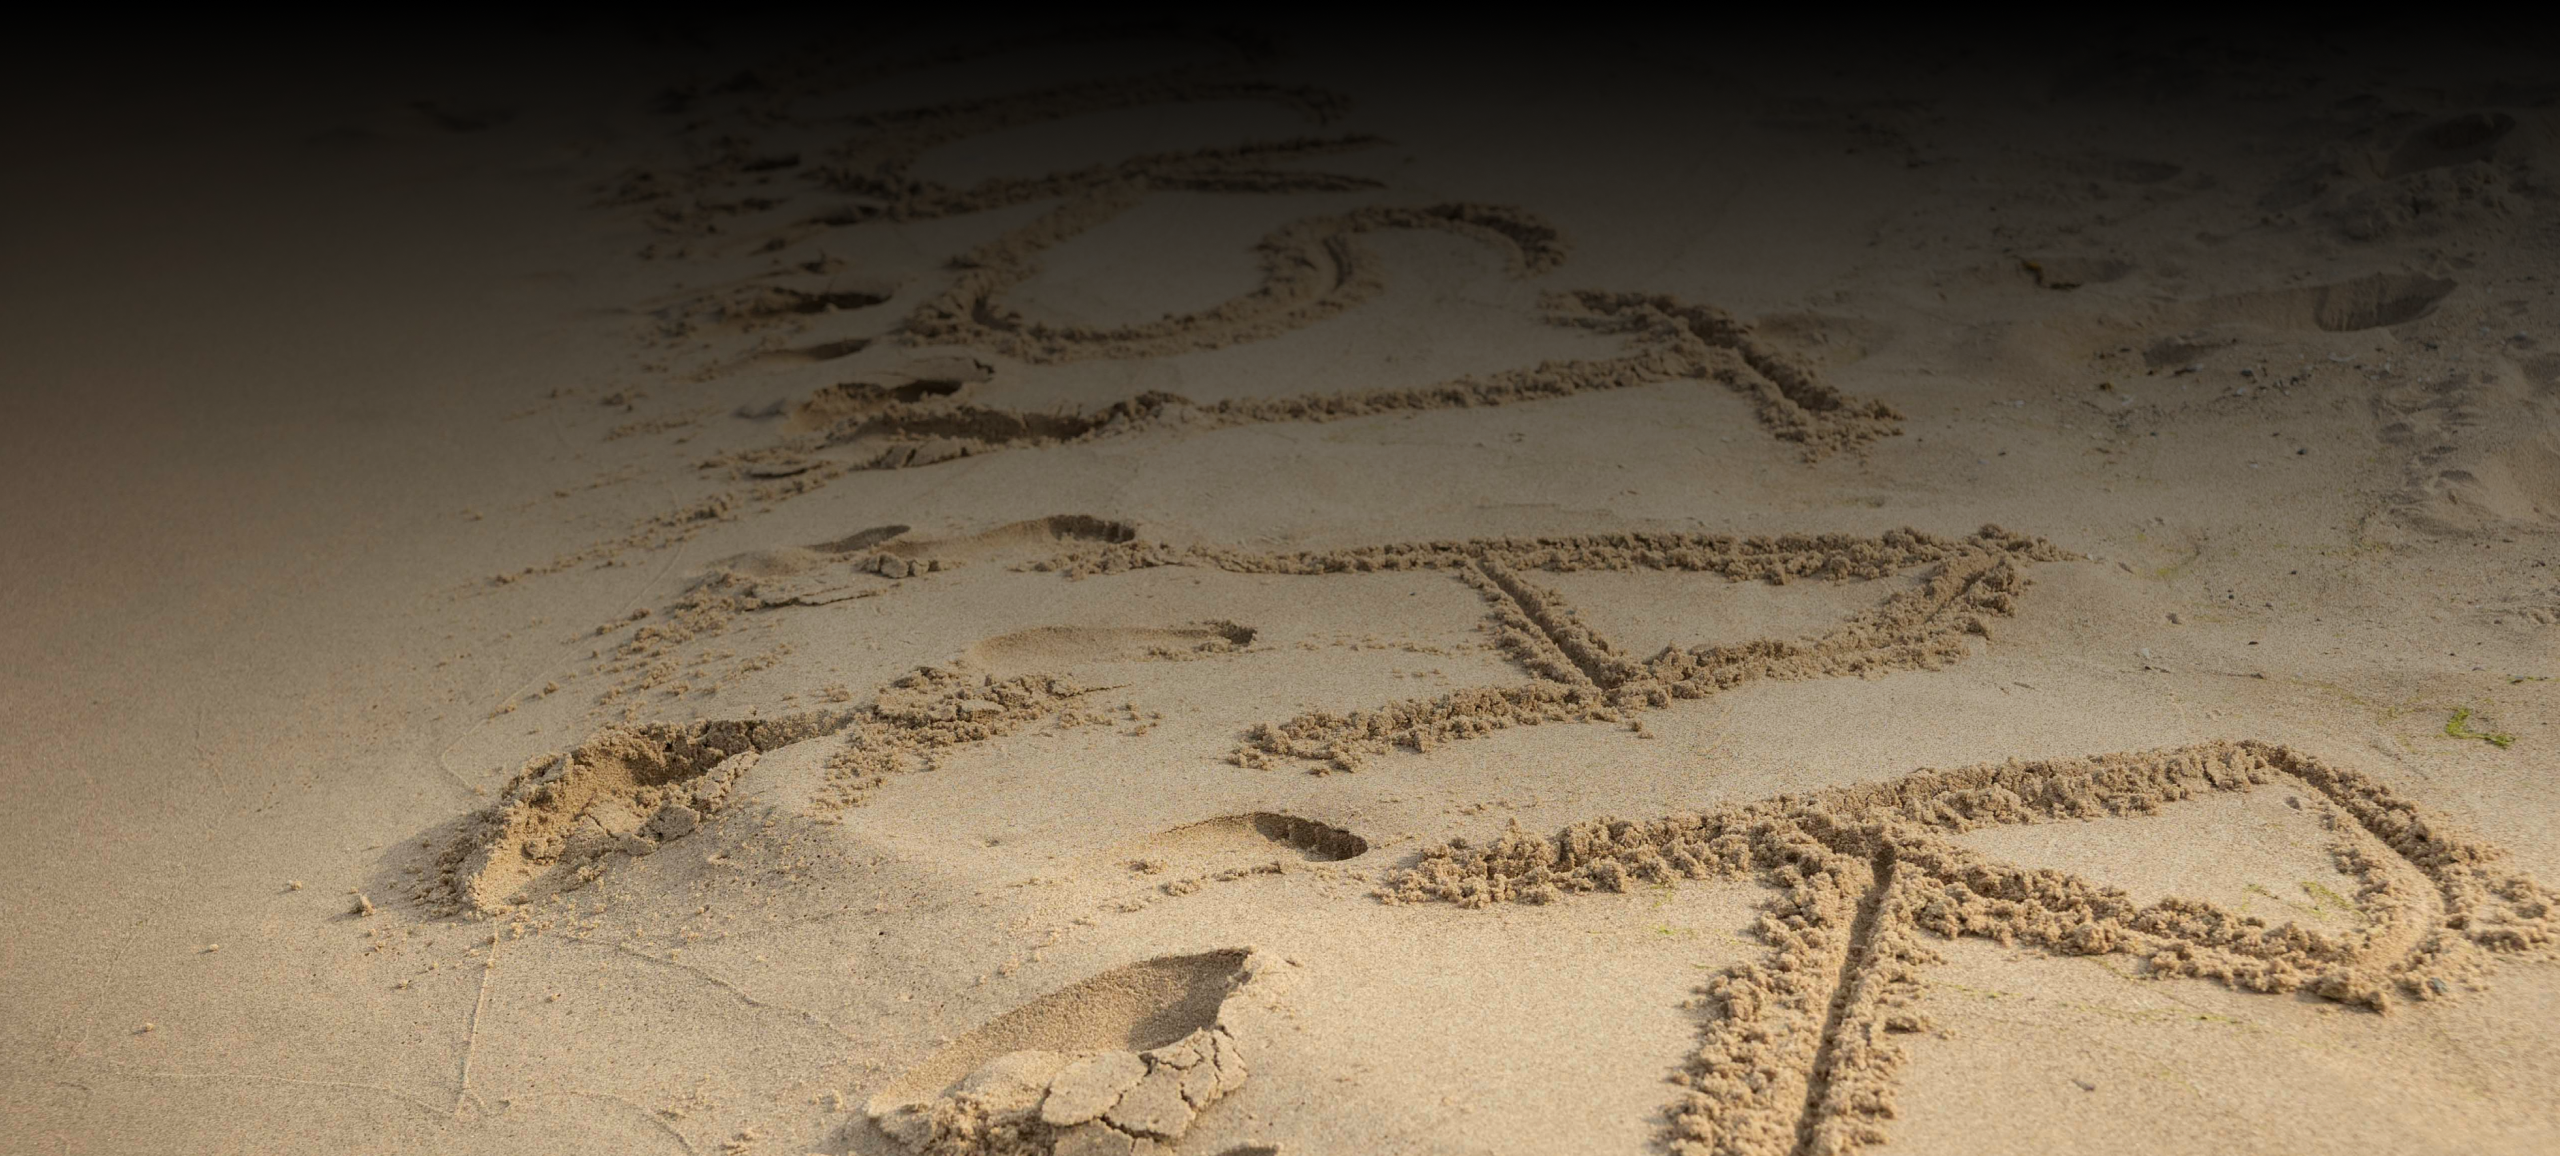 Rockstar written in the sand of a beach